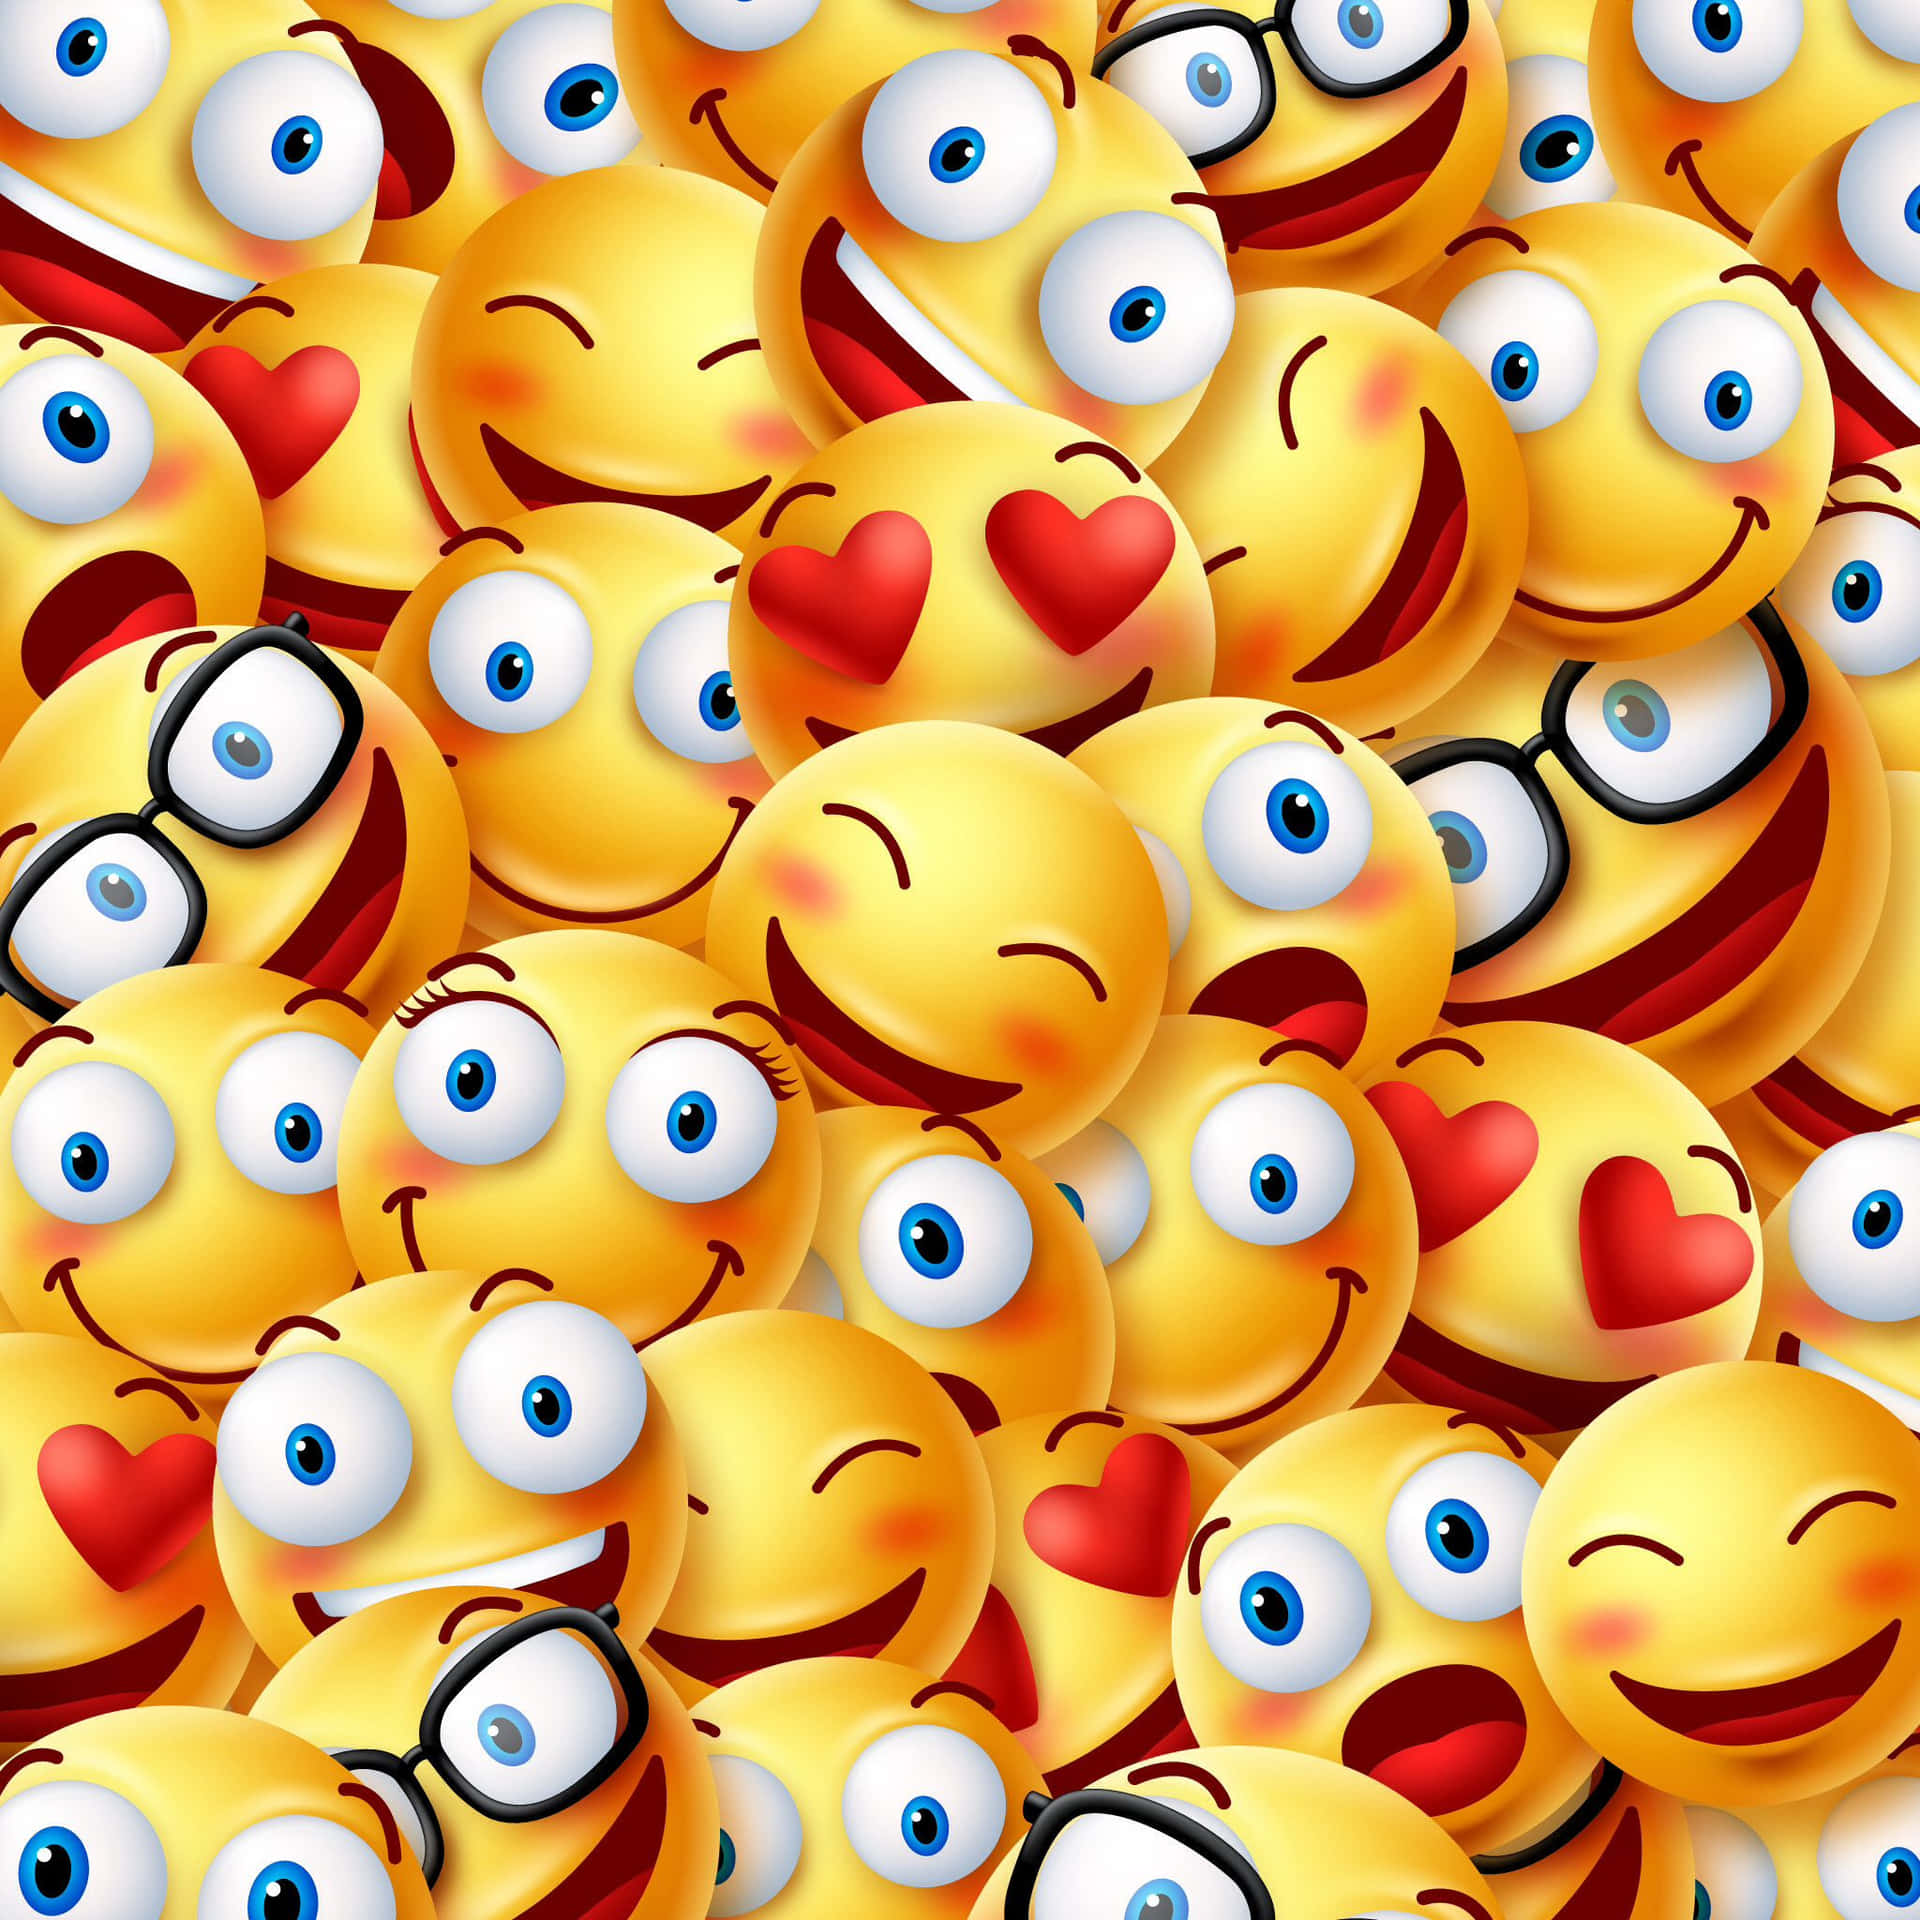 Backgrounds | Emoji backgrounds, Emoji wallpaper, Cute emoji wallpaper